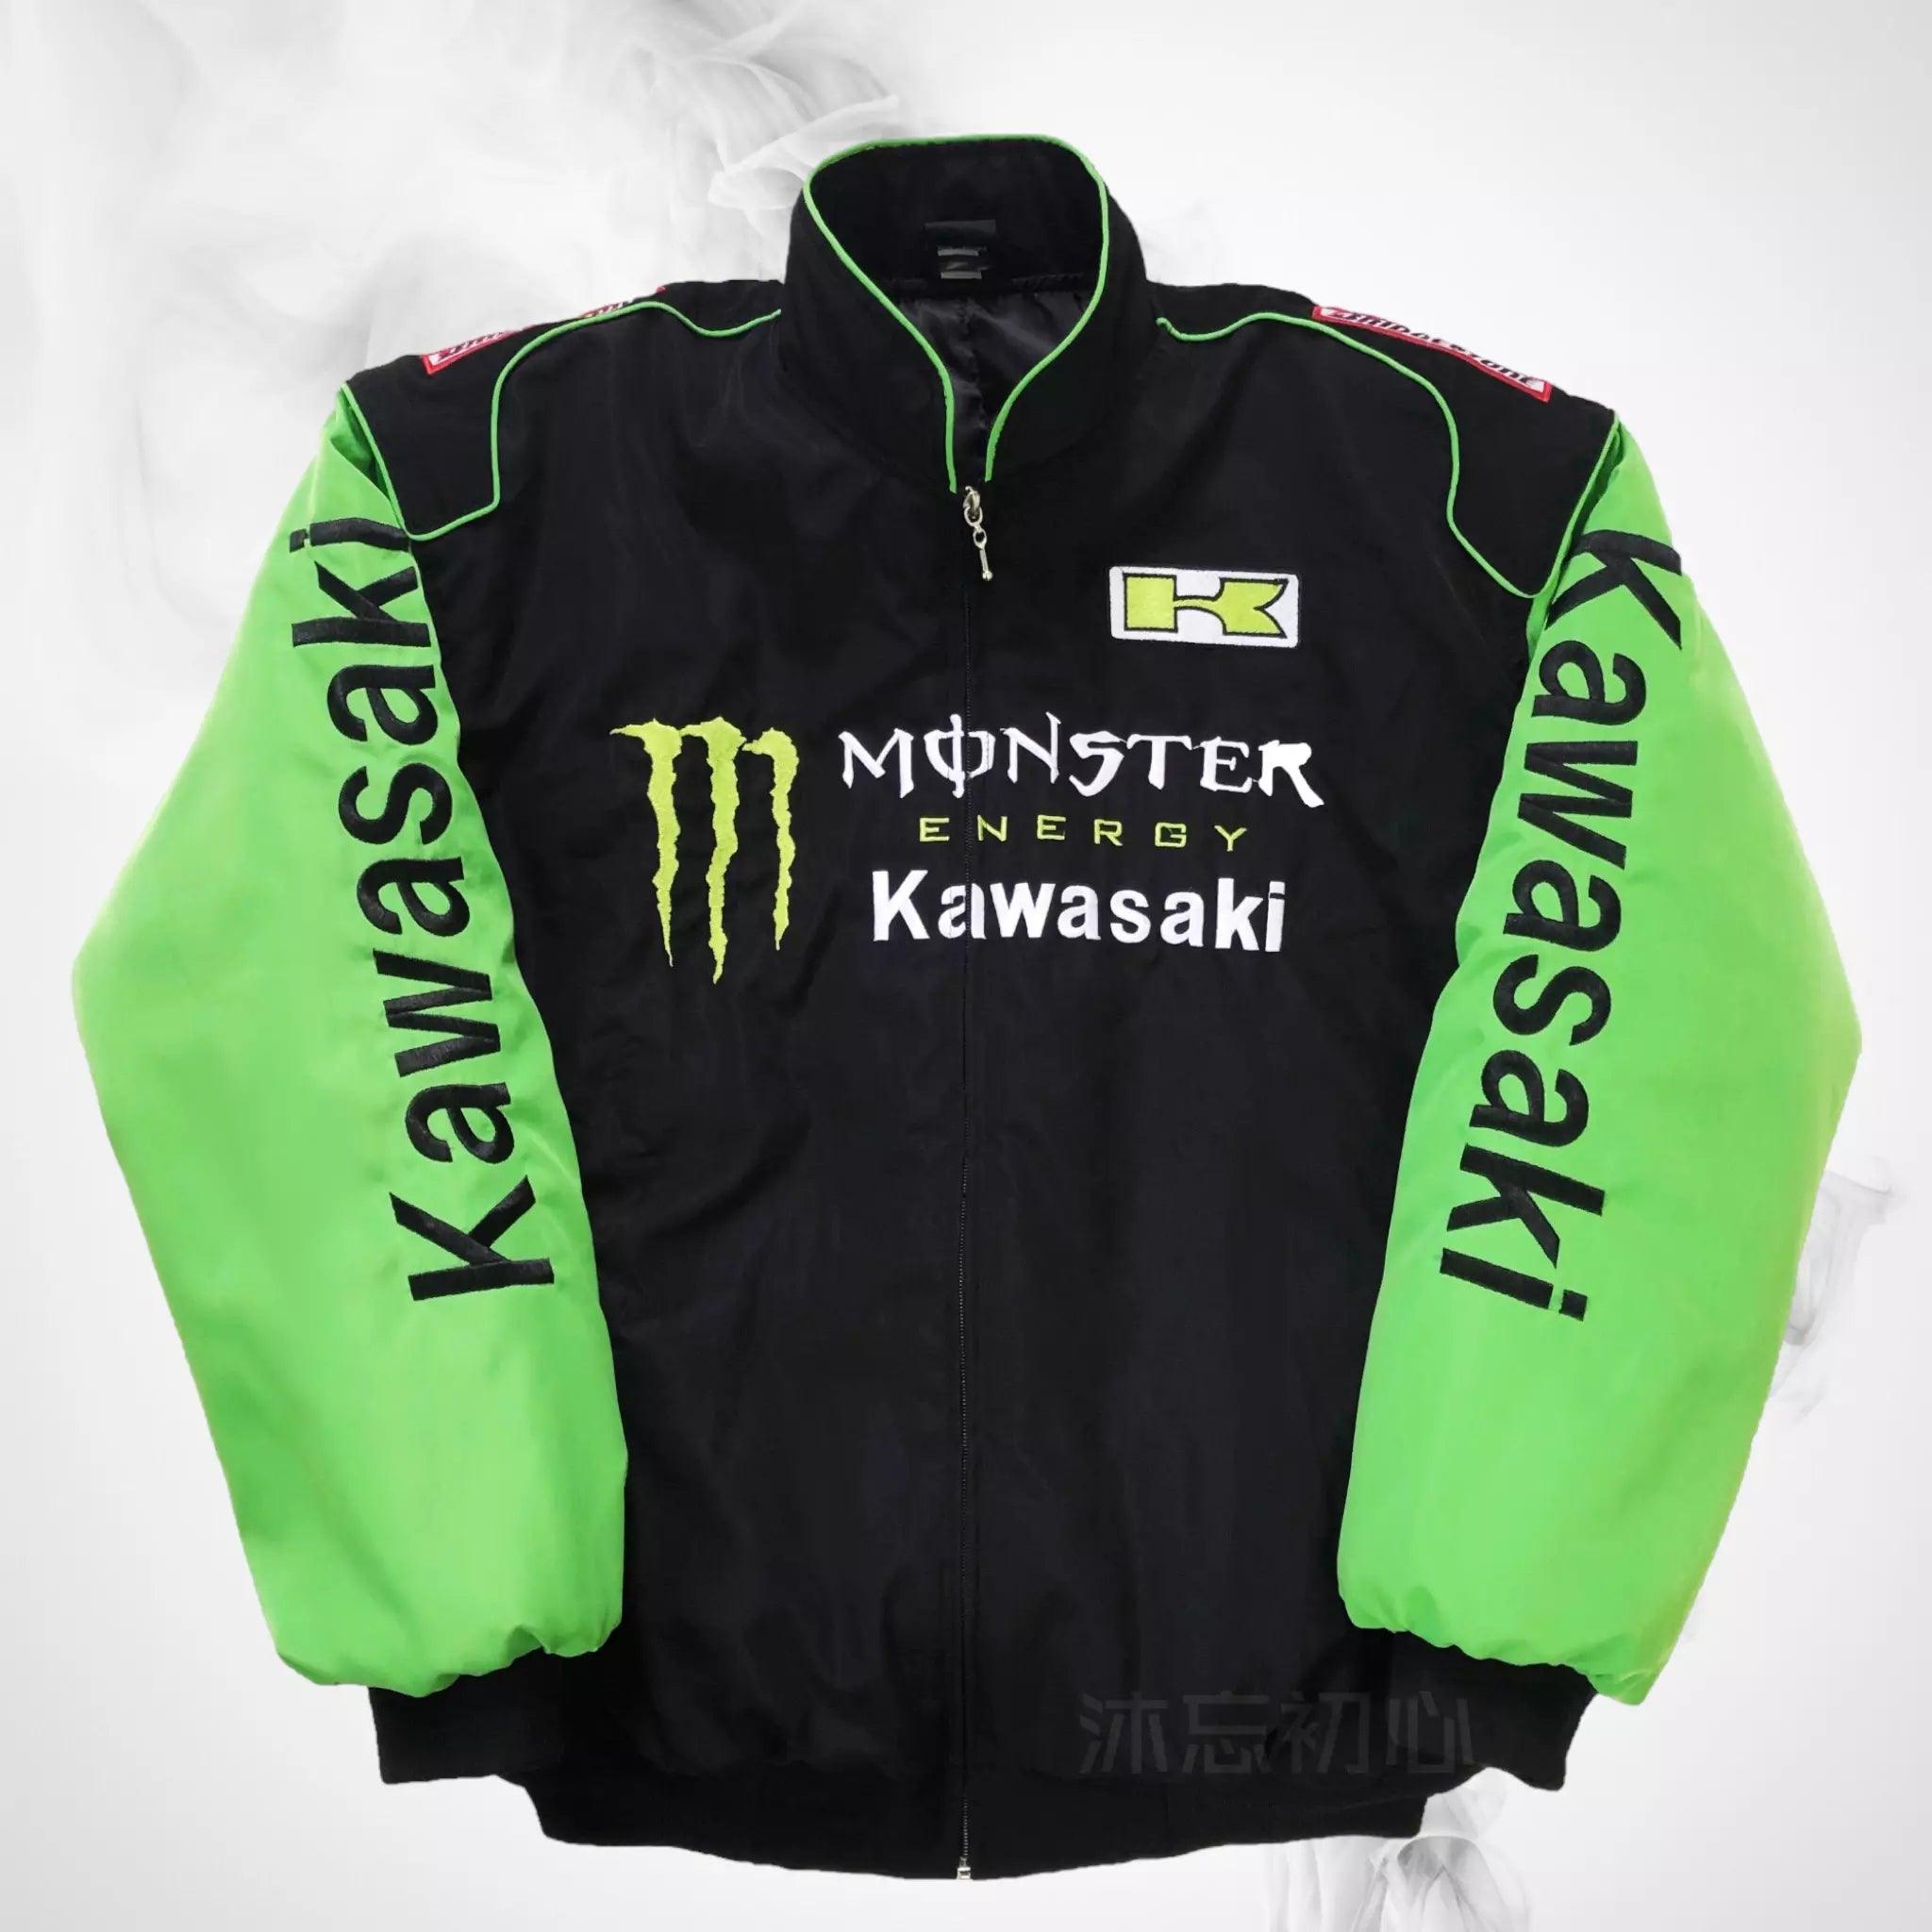 Monster Energy Kawasaki Racing Jacket - Dash Racegear 